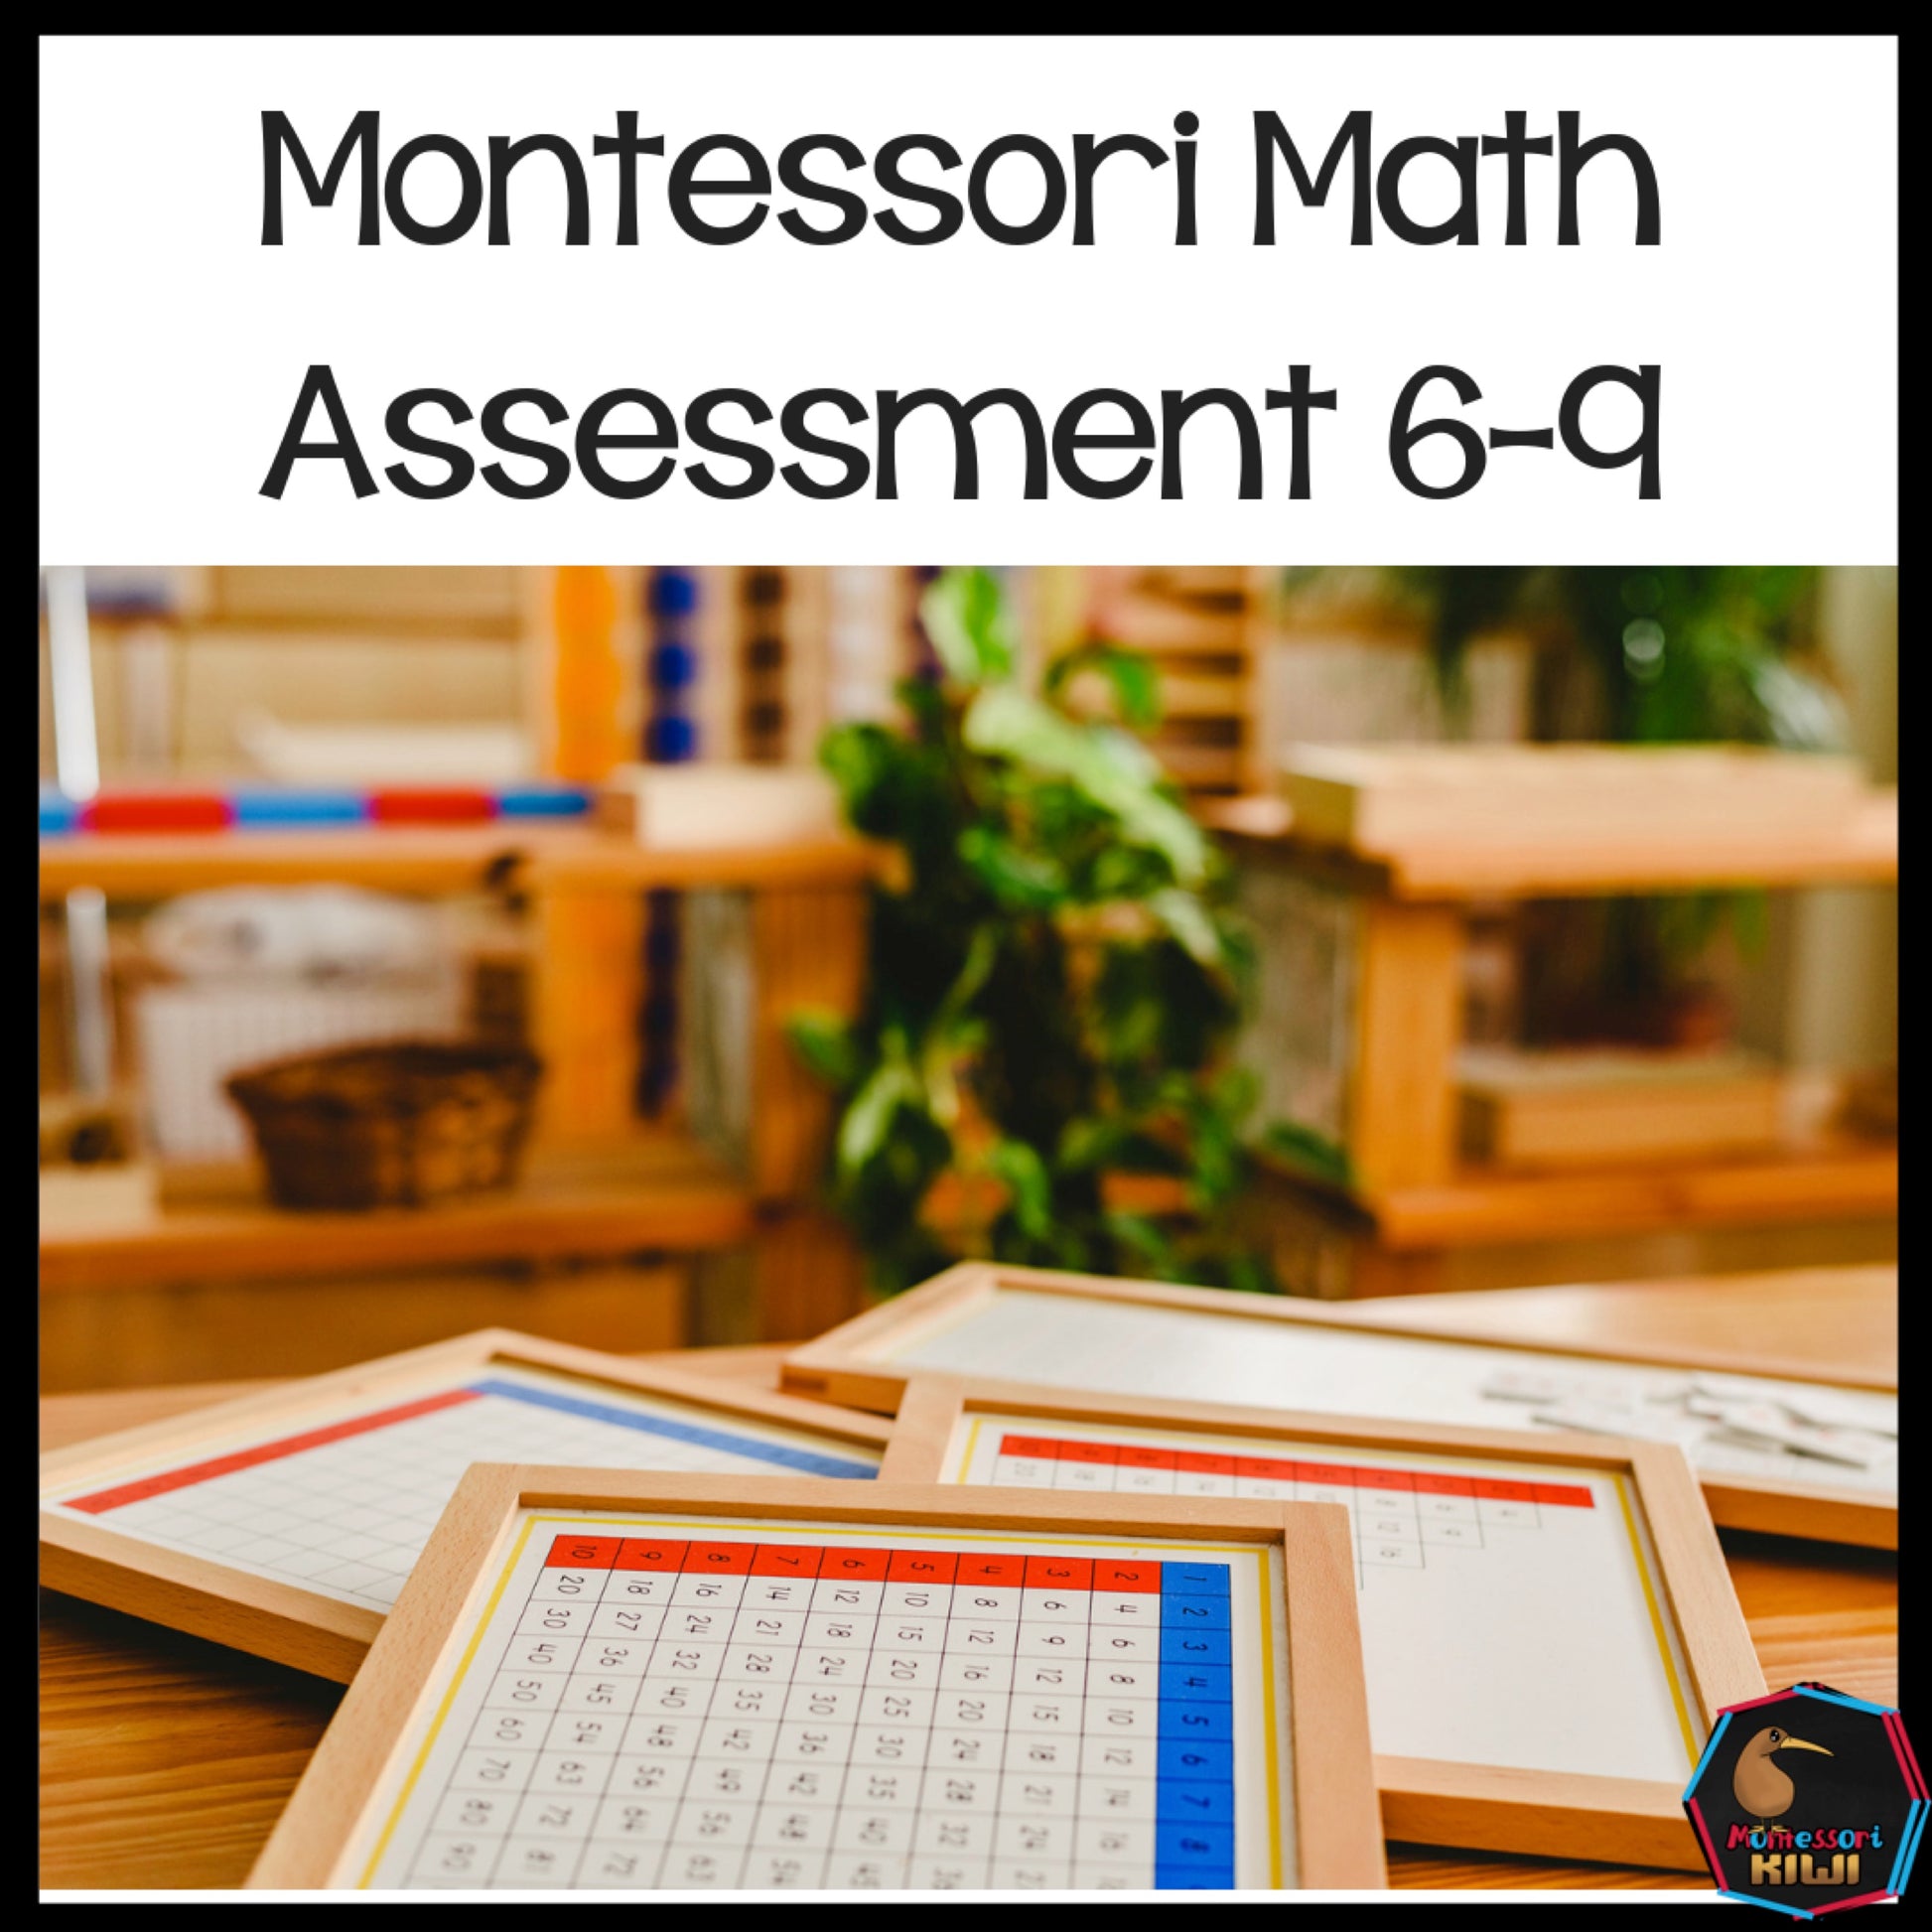 Montessori math assessment ages 6-9 - montessorikiwi